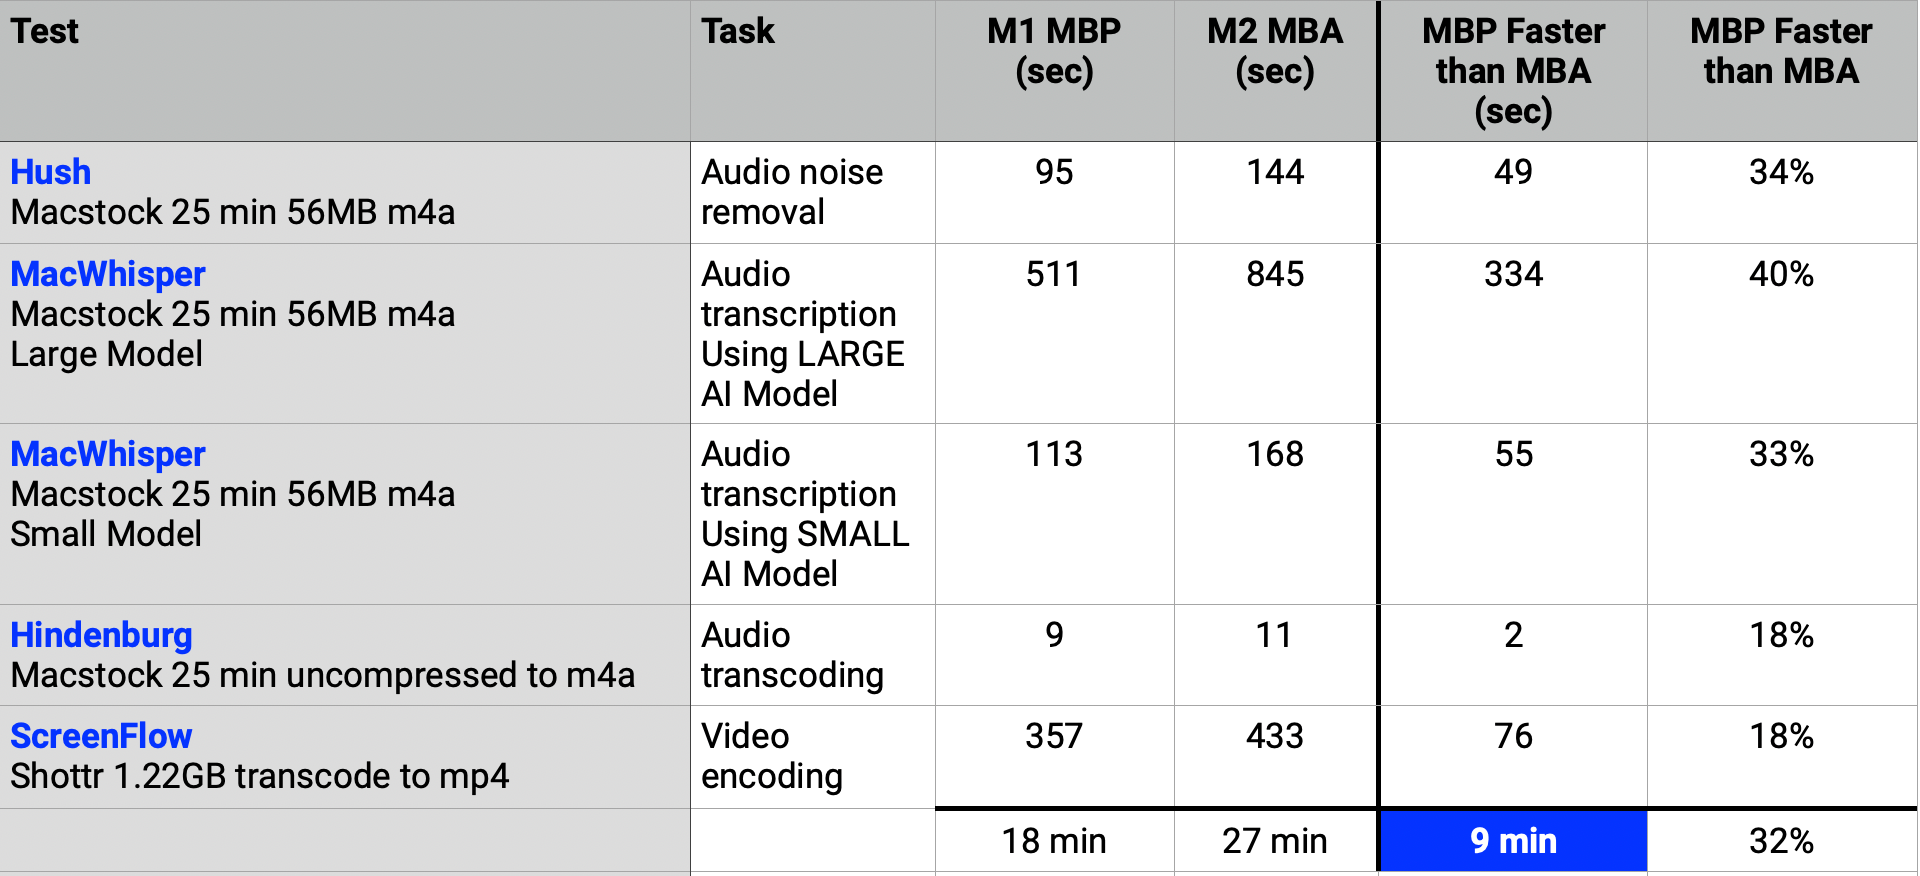 MBP vs MBA Timing Tests